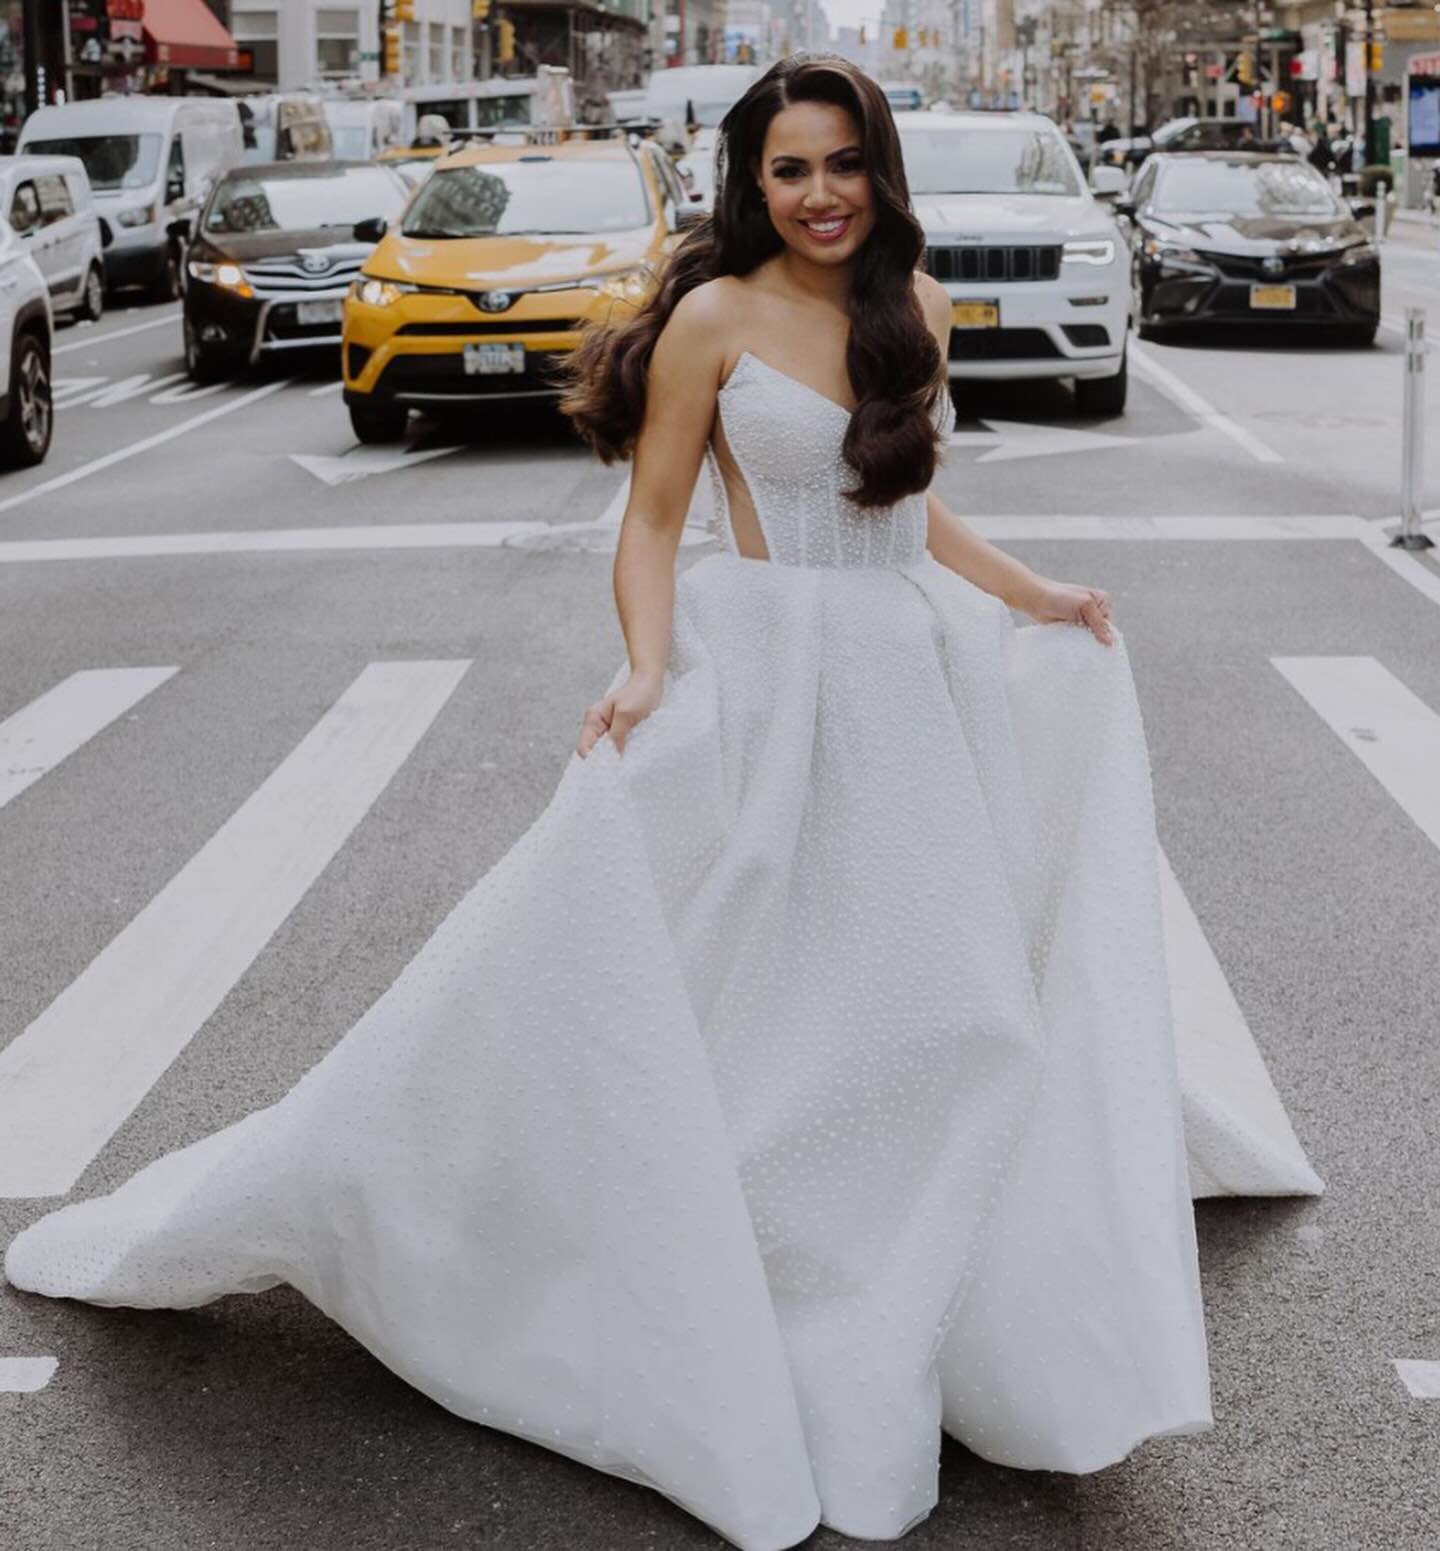 Be a bride that stops traffic!!💍🤍

#nycbride #newyorkcity #bridalmoment #newyorkminute #newyorknewyork #bridetobe #misstomrs #shesgettingmarried #stoppingtraffic #bridalmakeup #bridalhairstyle #weddinggown #weddingdresses #weddinginspo #weddingphot